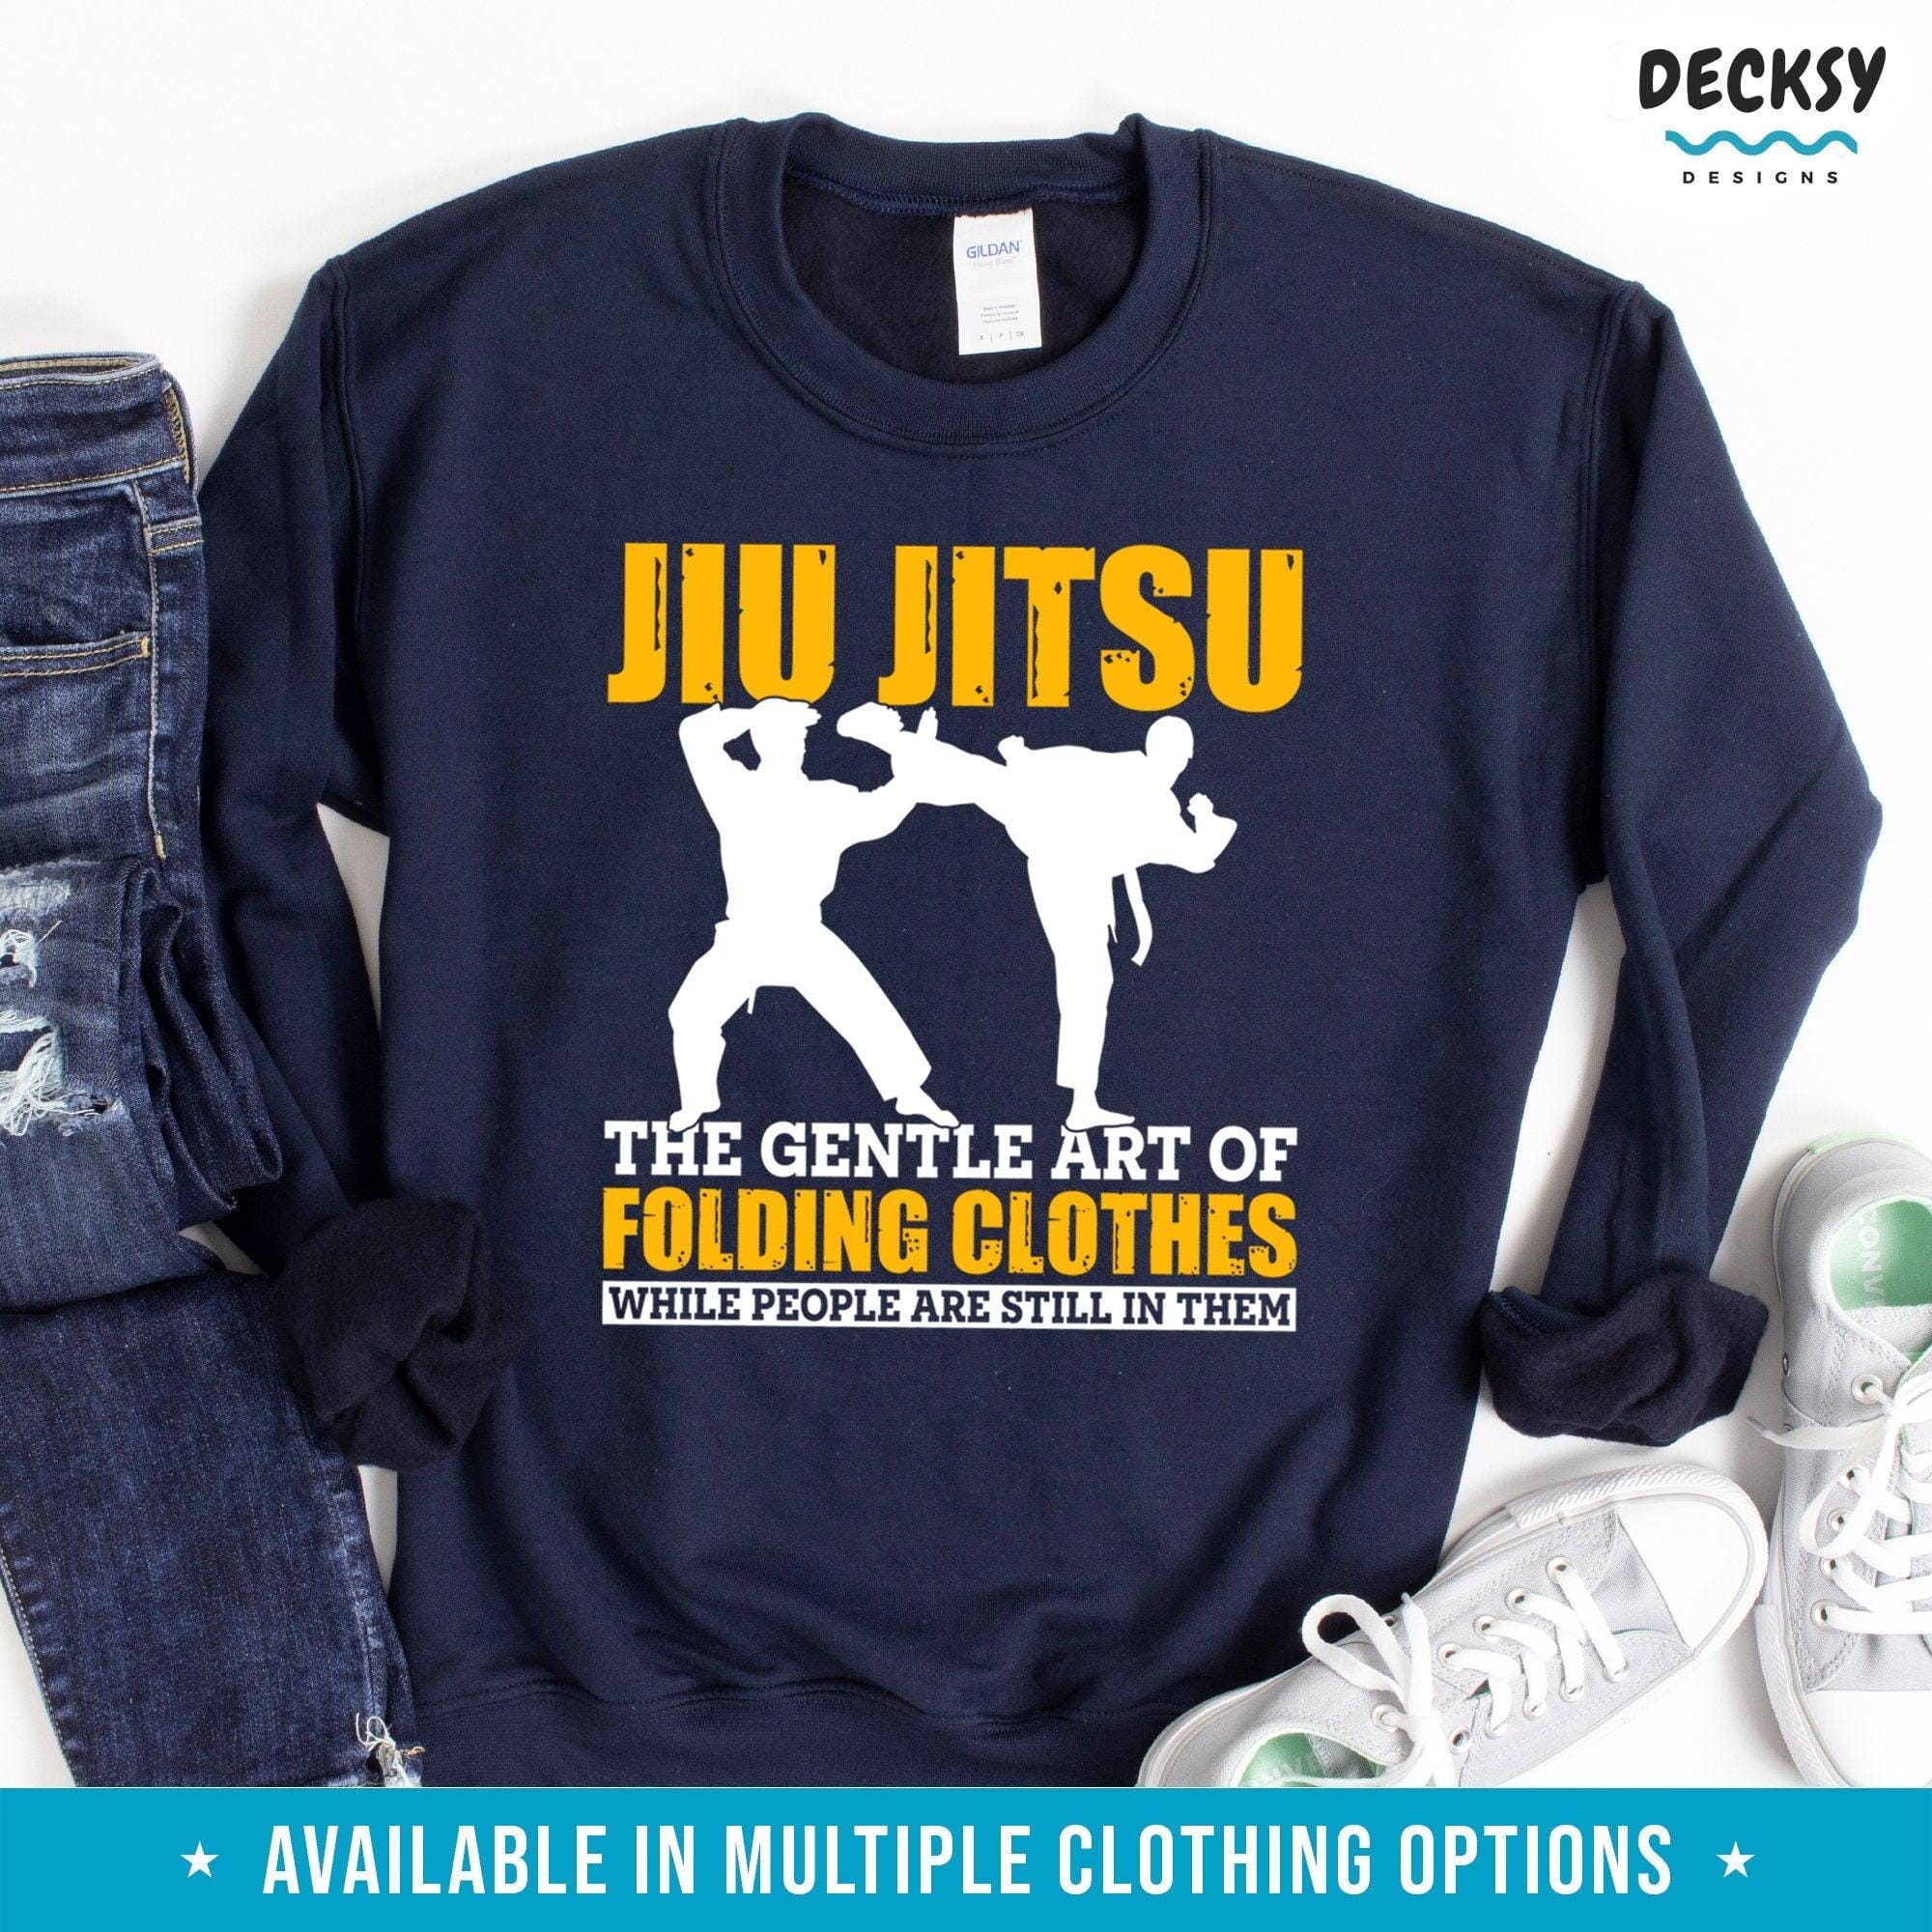 Jiu Jitsu Shirt, BJJ Gift-Clothing:Gender-Neutral Adult Clothing:Tops & Tees:T-shirts:Graphic Tees-DecksyDesigns